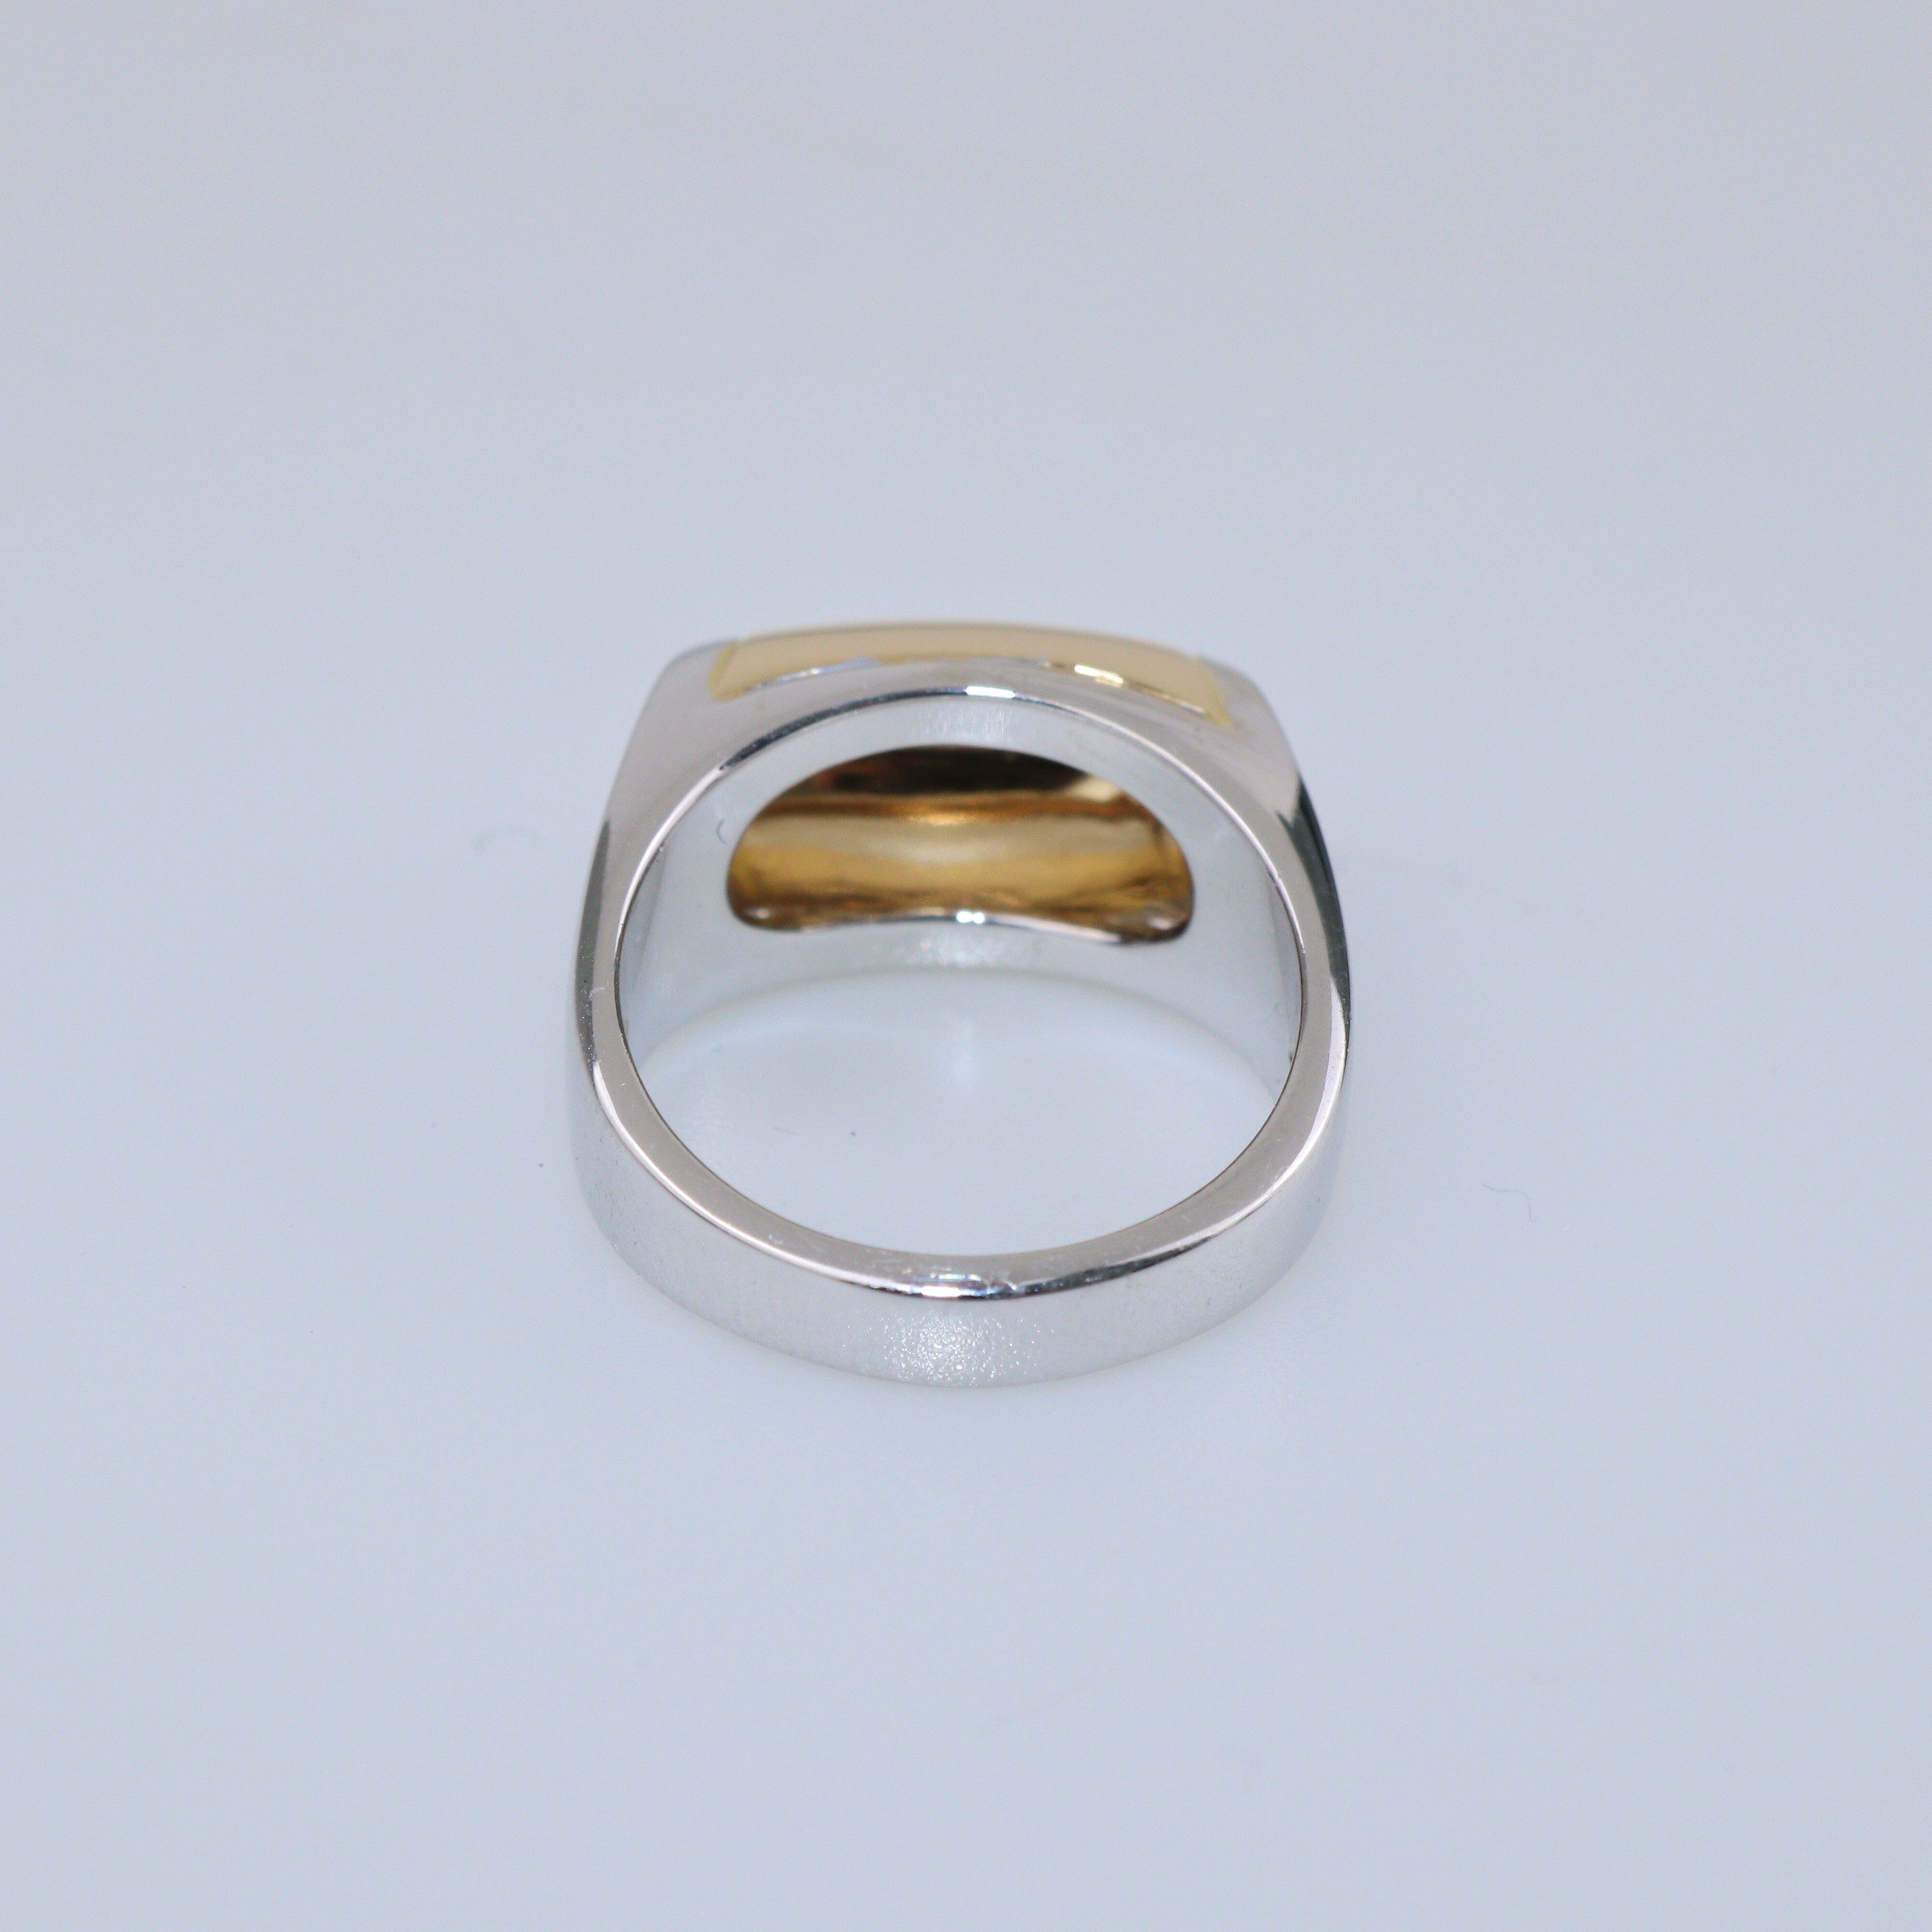 Bvlgari Tronchetto 18k Two Tone Gold Ring Fine Jewelry Bvlgari 